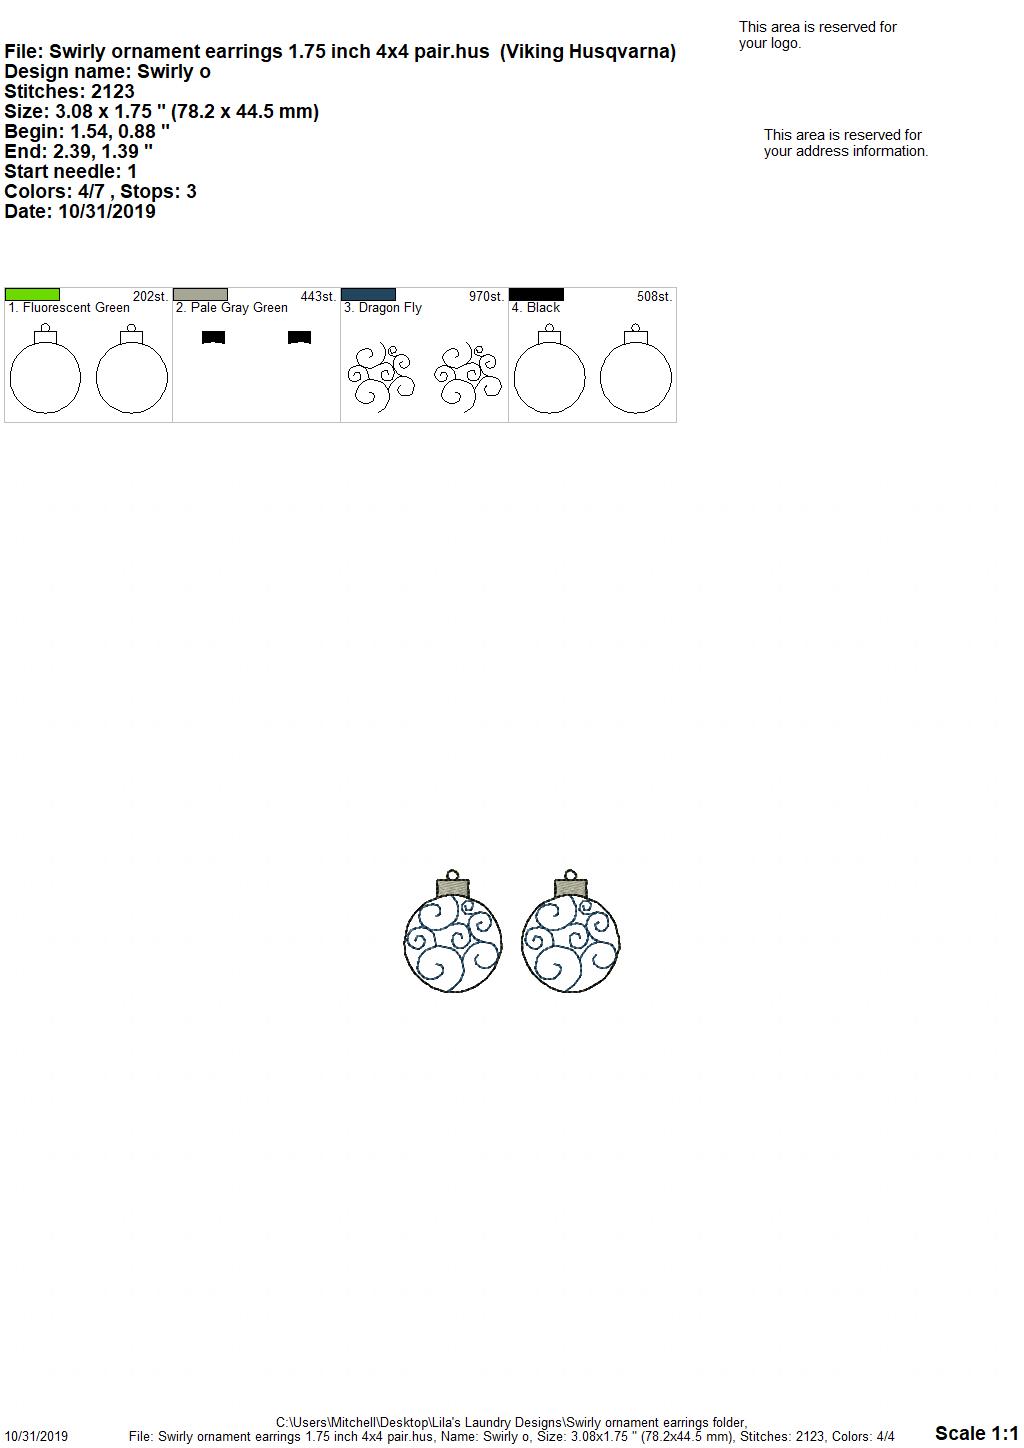 Swirly Ornament Earrings - 3 sizes - Digital Embroidery Design